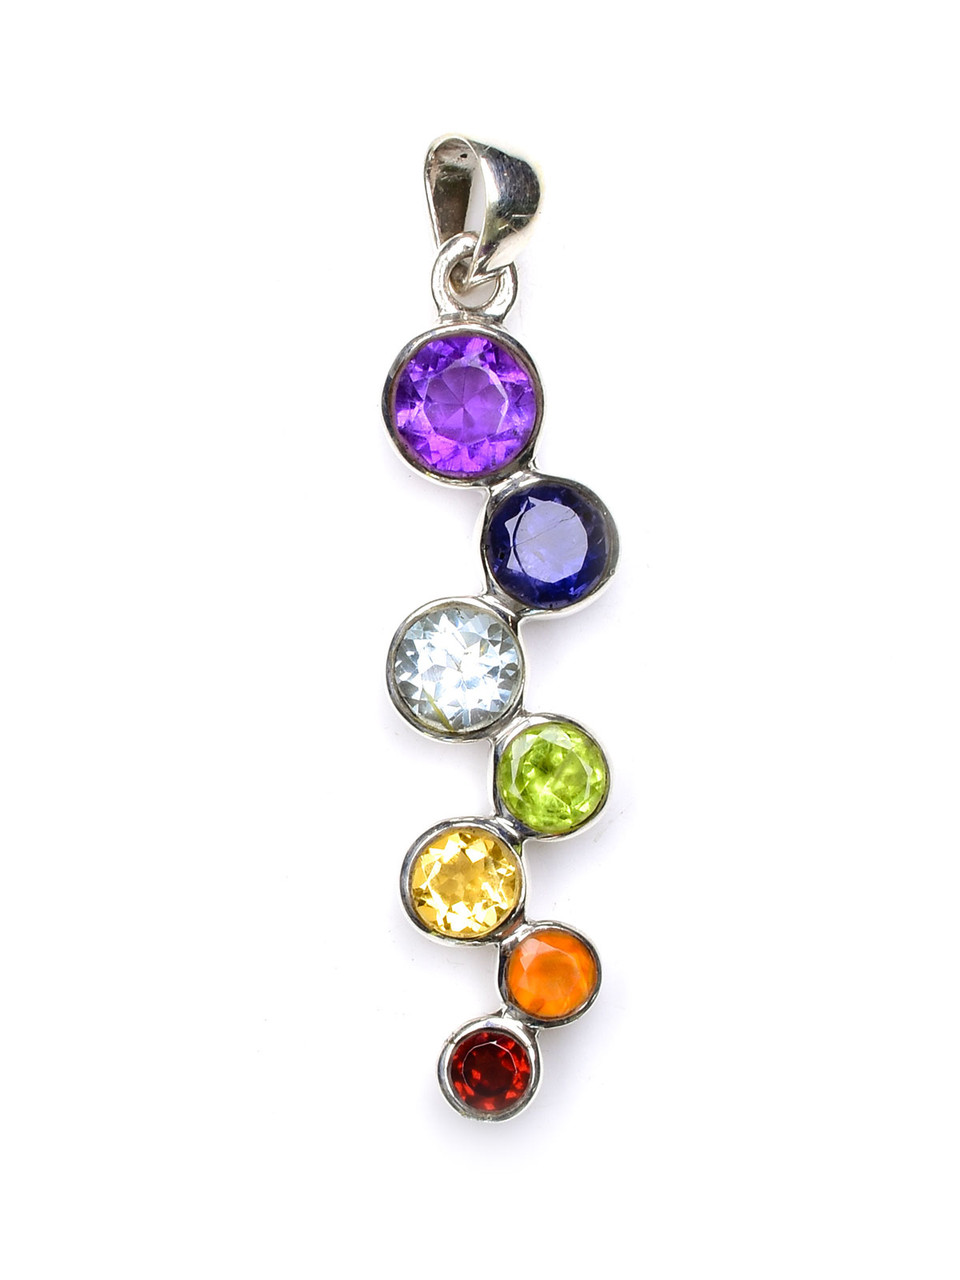 Chakra Offset Pendant - Exquisite Crystals